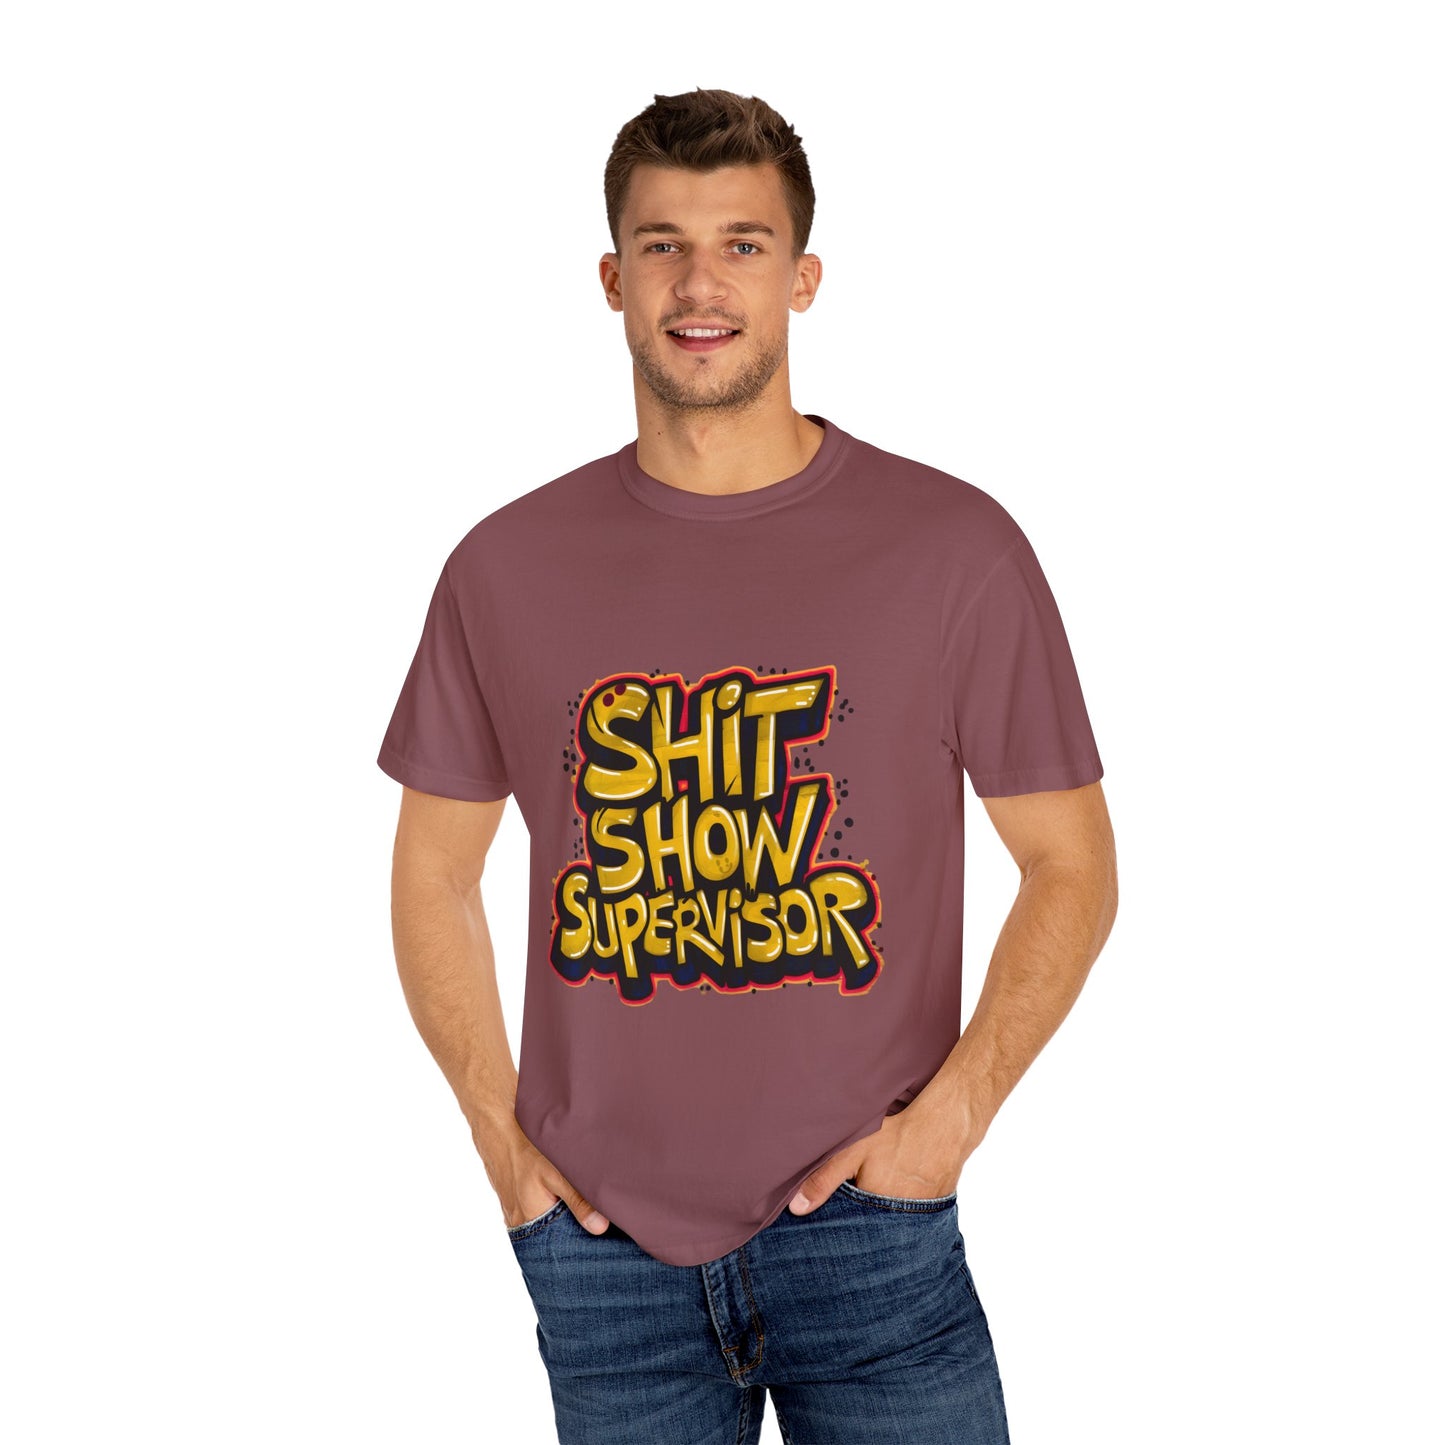 Shit Show Supervisor Urban Sarcastic Graphic Unisex Garment Dyed T-shirt Cotton Funny Humorous Graphic Soft Premium Unisex Men Women Brick T-shirt Birthday Gift-30